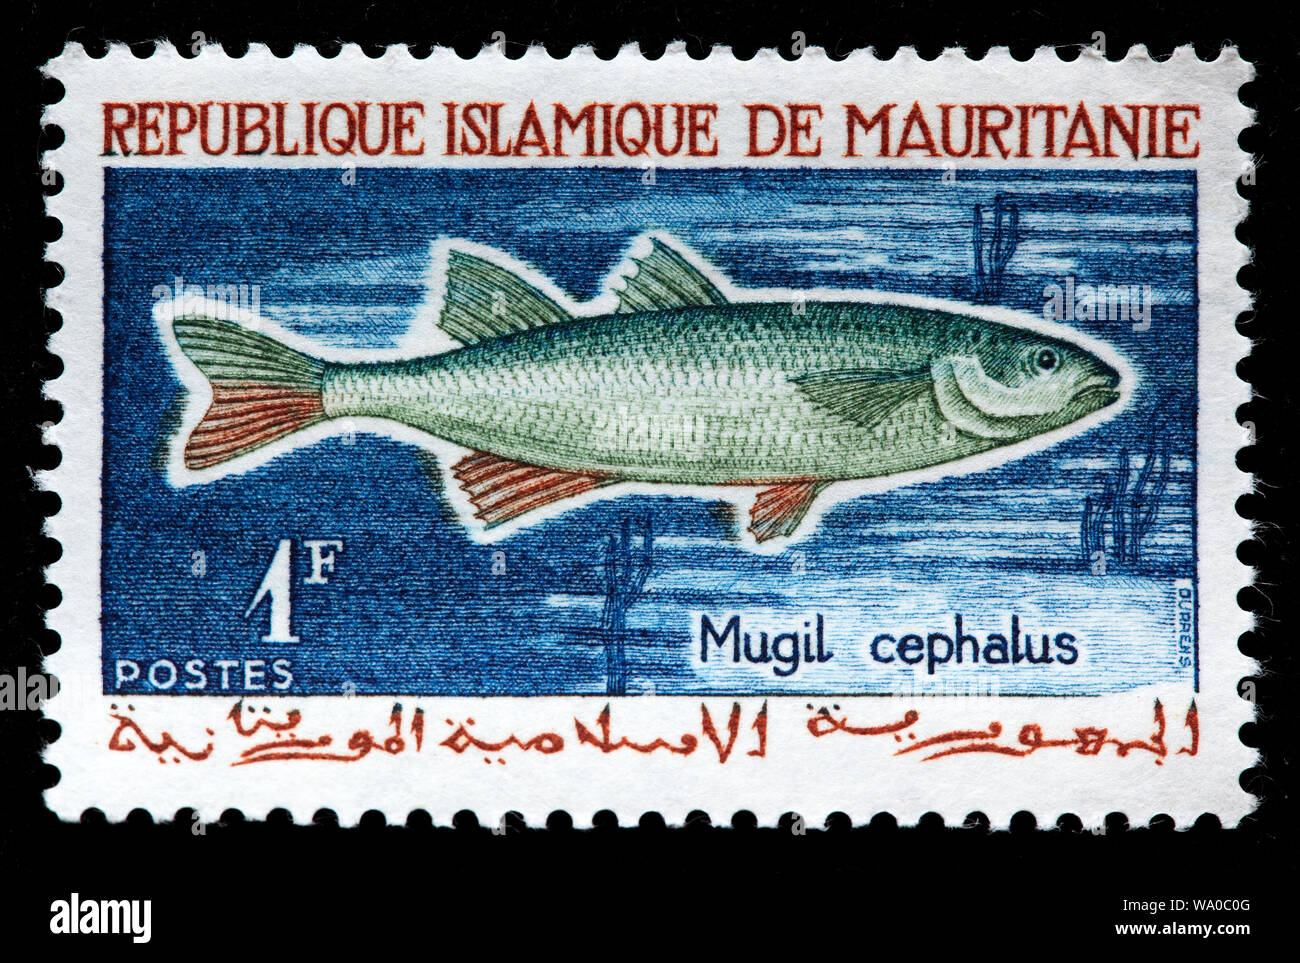 Flathead Mullet, Mugil cephalus, postage stamp, Mauritatia, 1964 Stock Photo